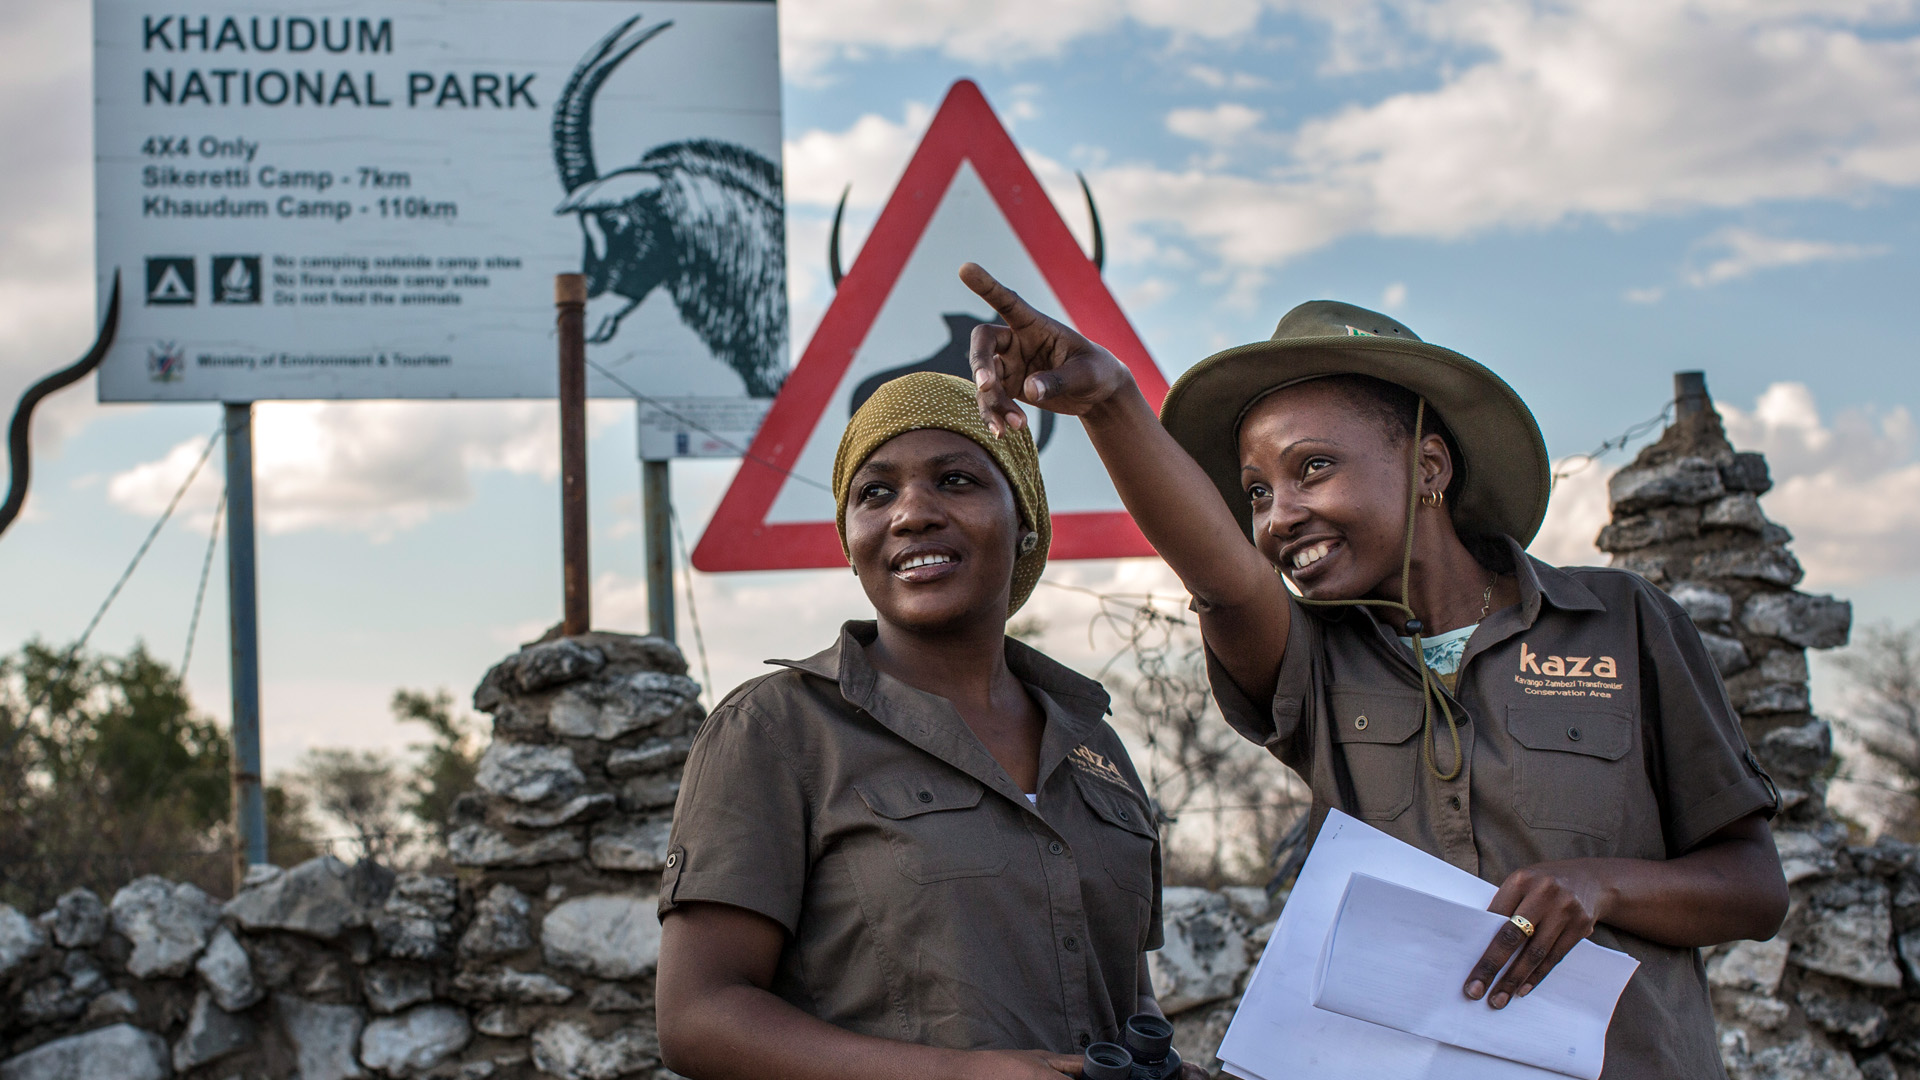 Women rangers in Namibia's Khaudum National Park, part of the Kavango Zambezi Transfrontier Conservation Area